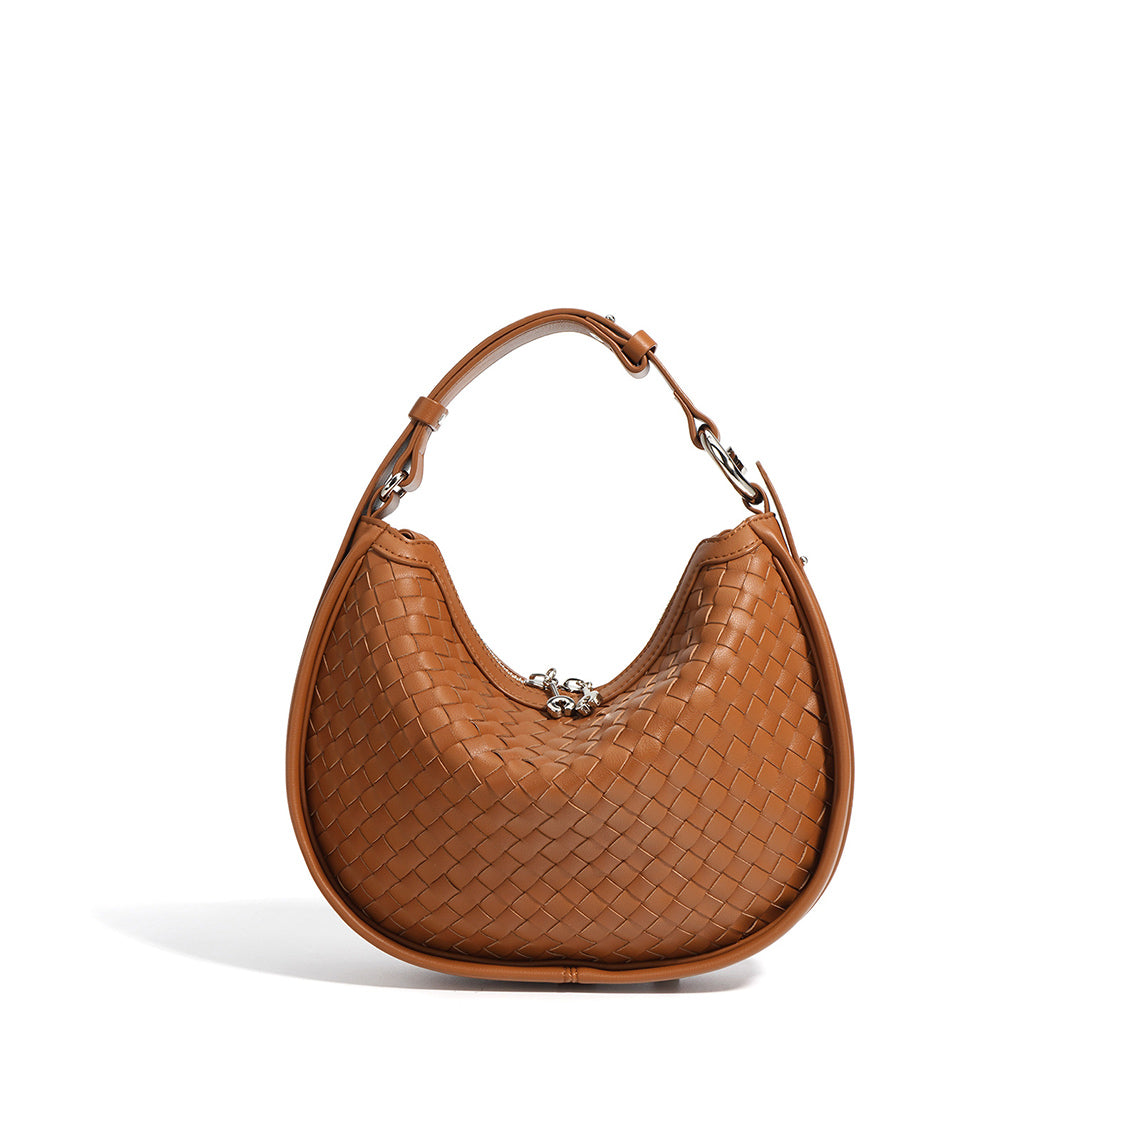 Brown Leather Woven Leather Handbag Crossbody Bag for Women